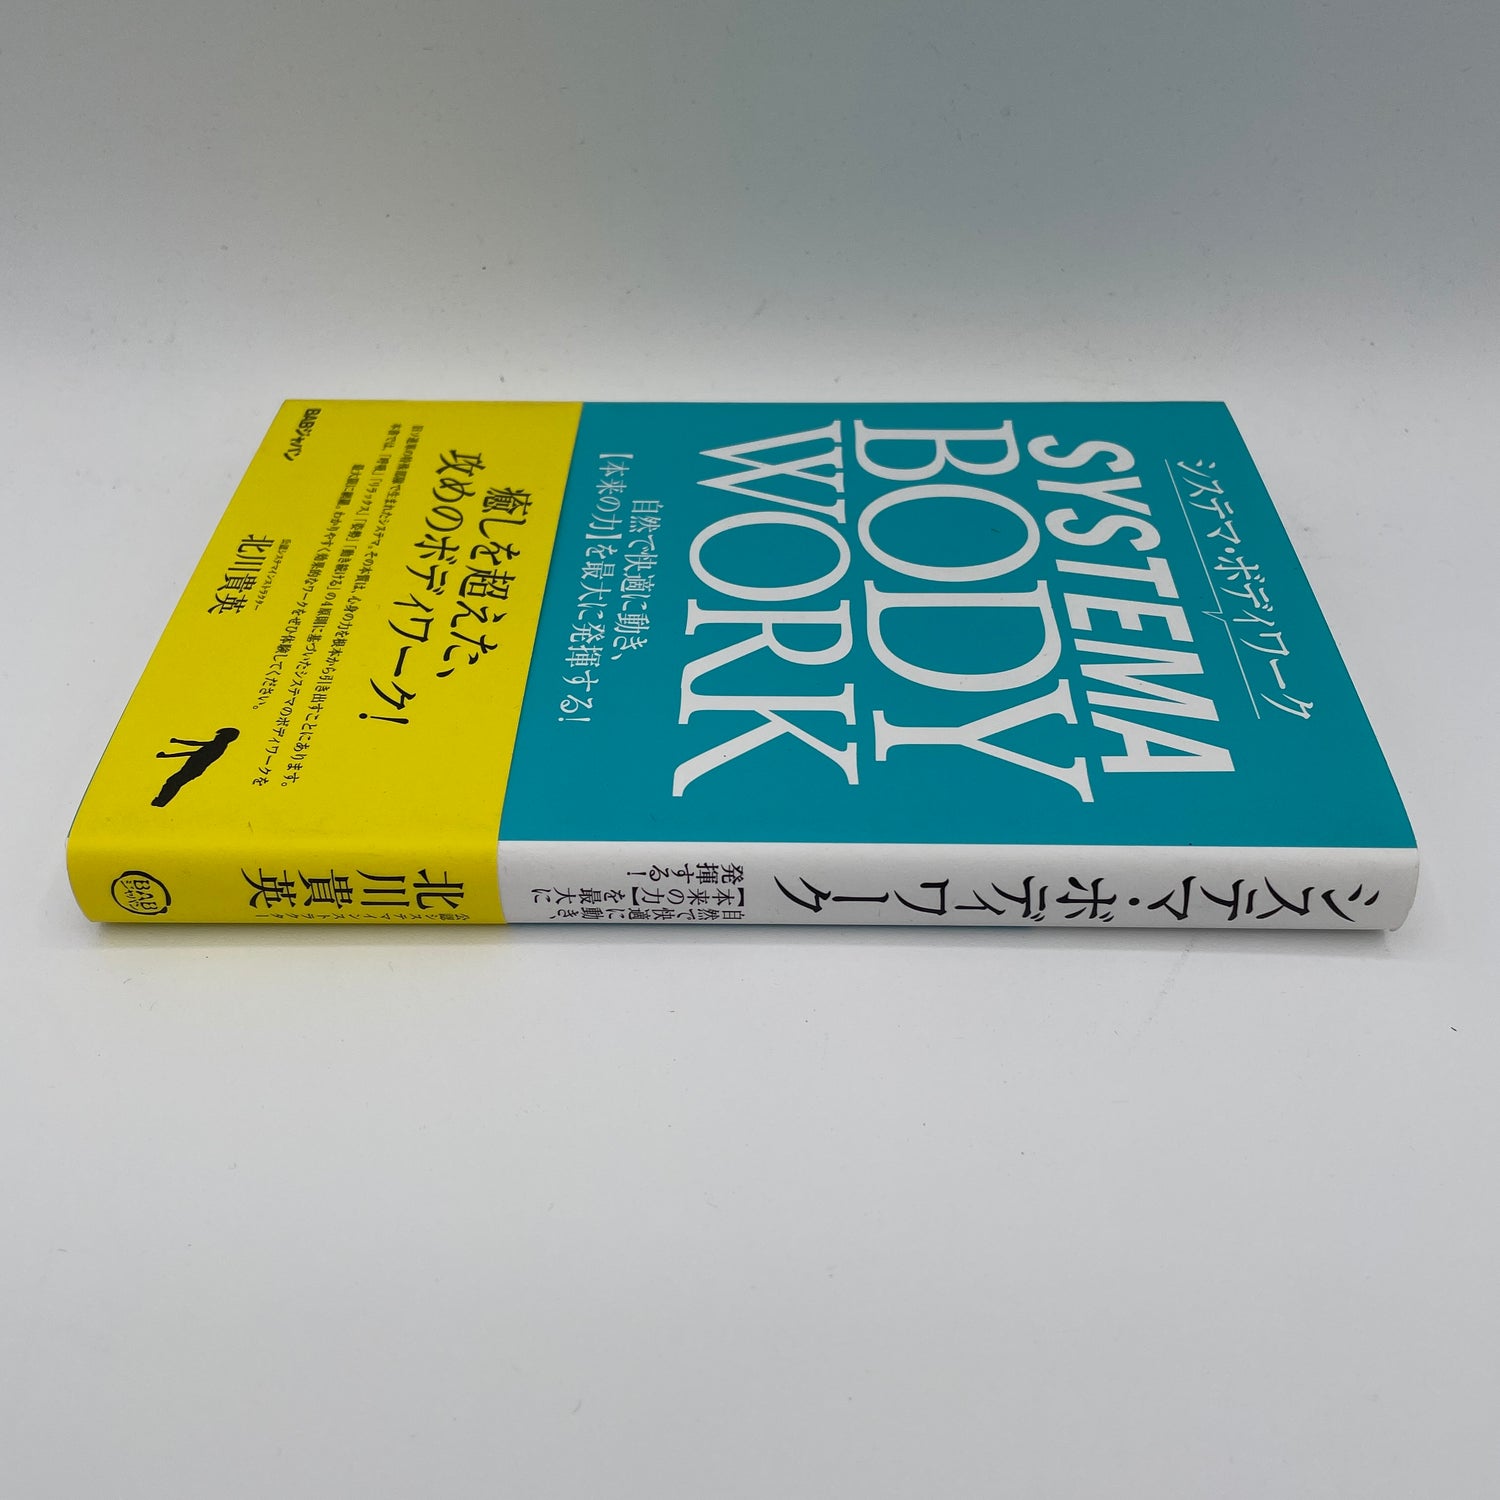 Systema Body Work Book by Takahide Kitagawa